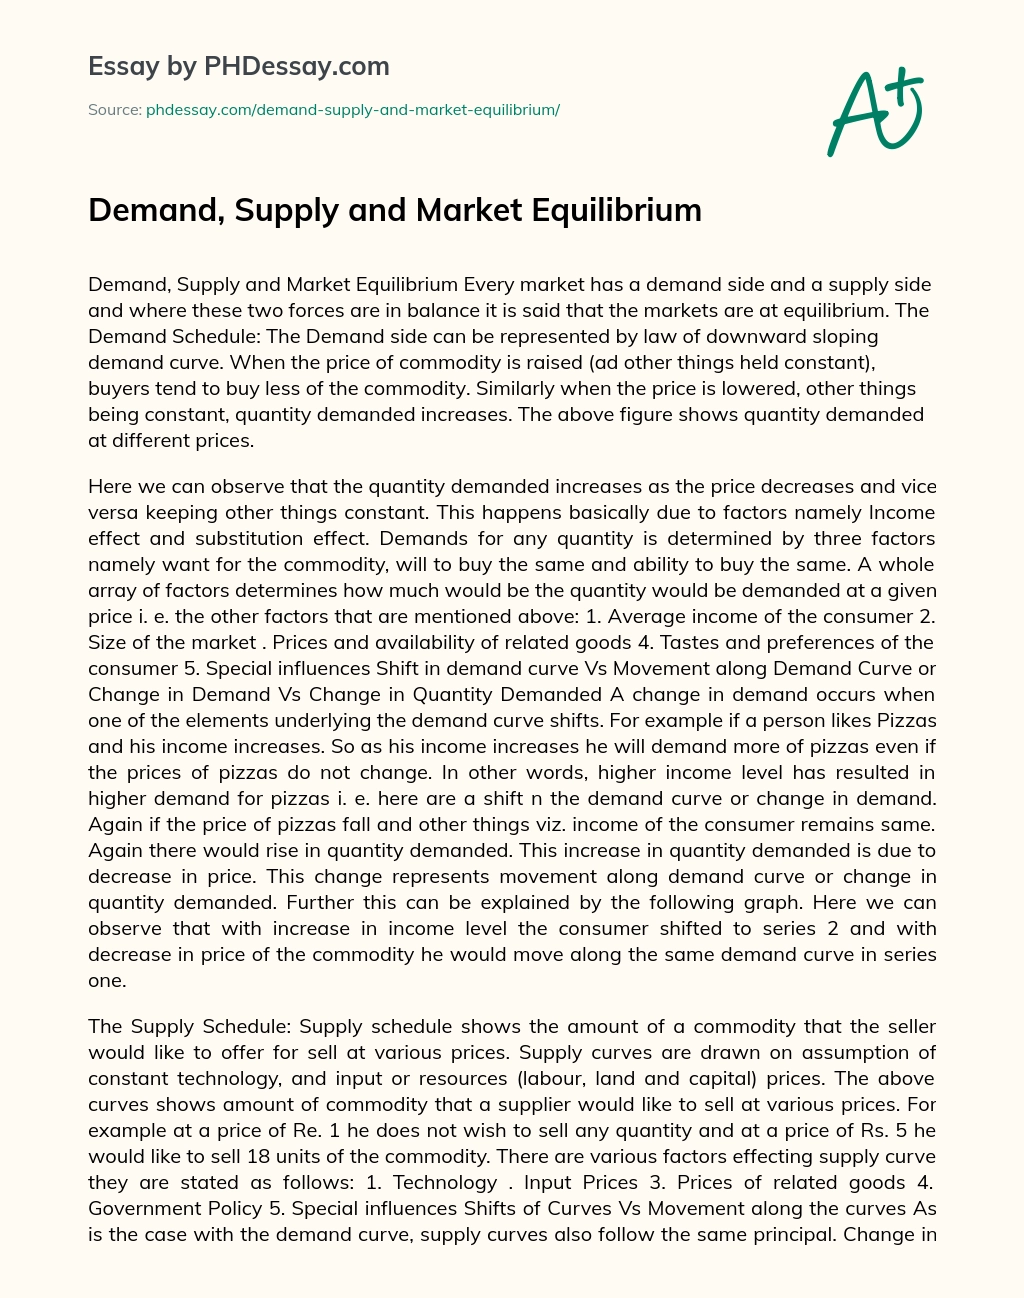 Demand, Supply and Market Equilibrium essay